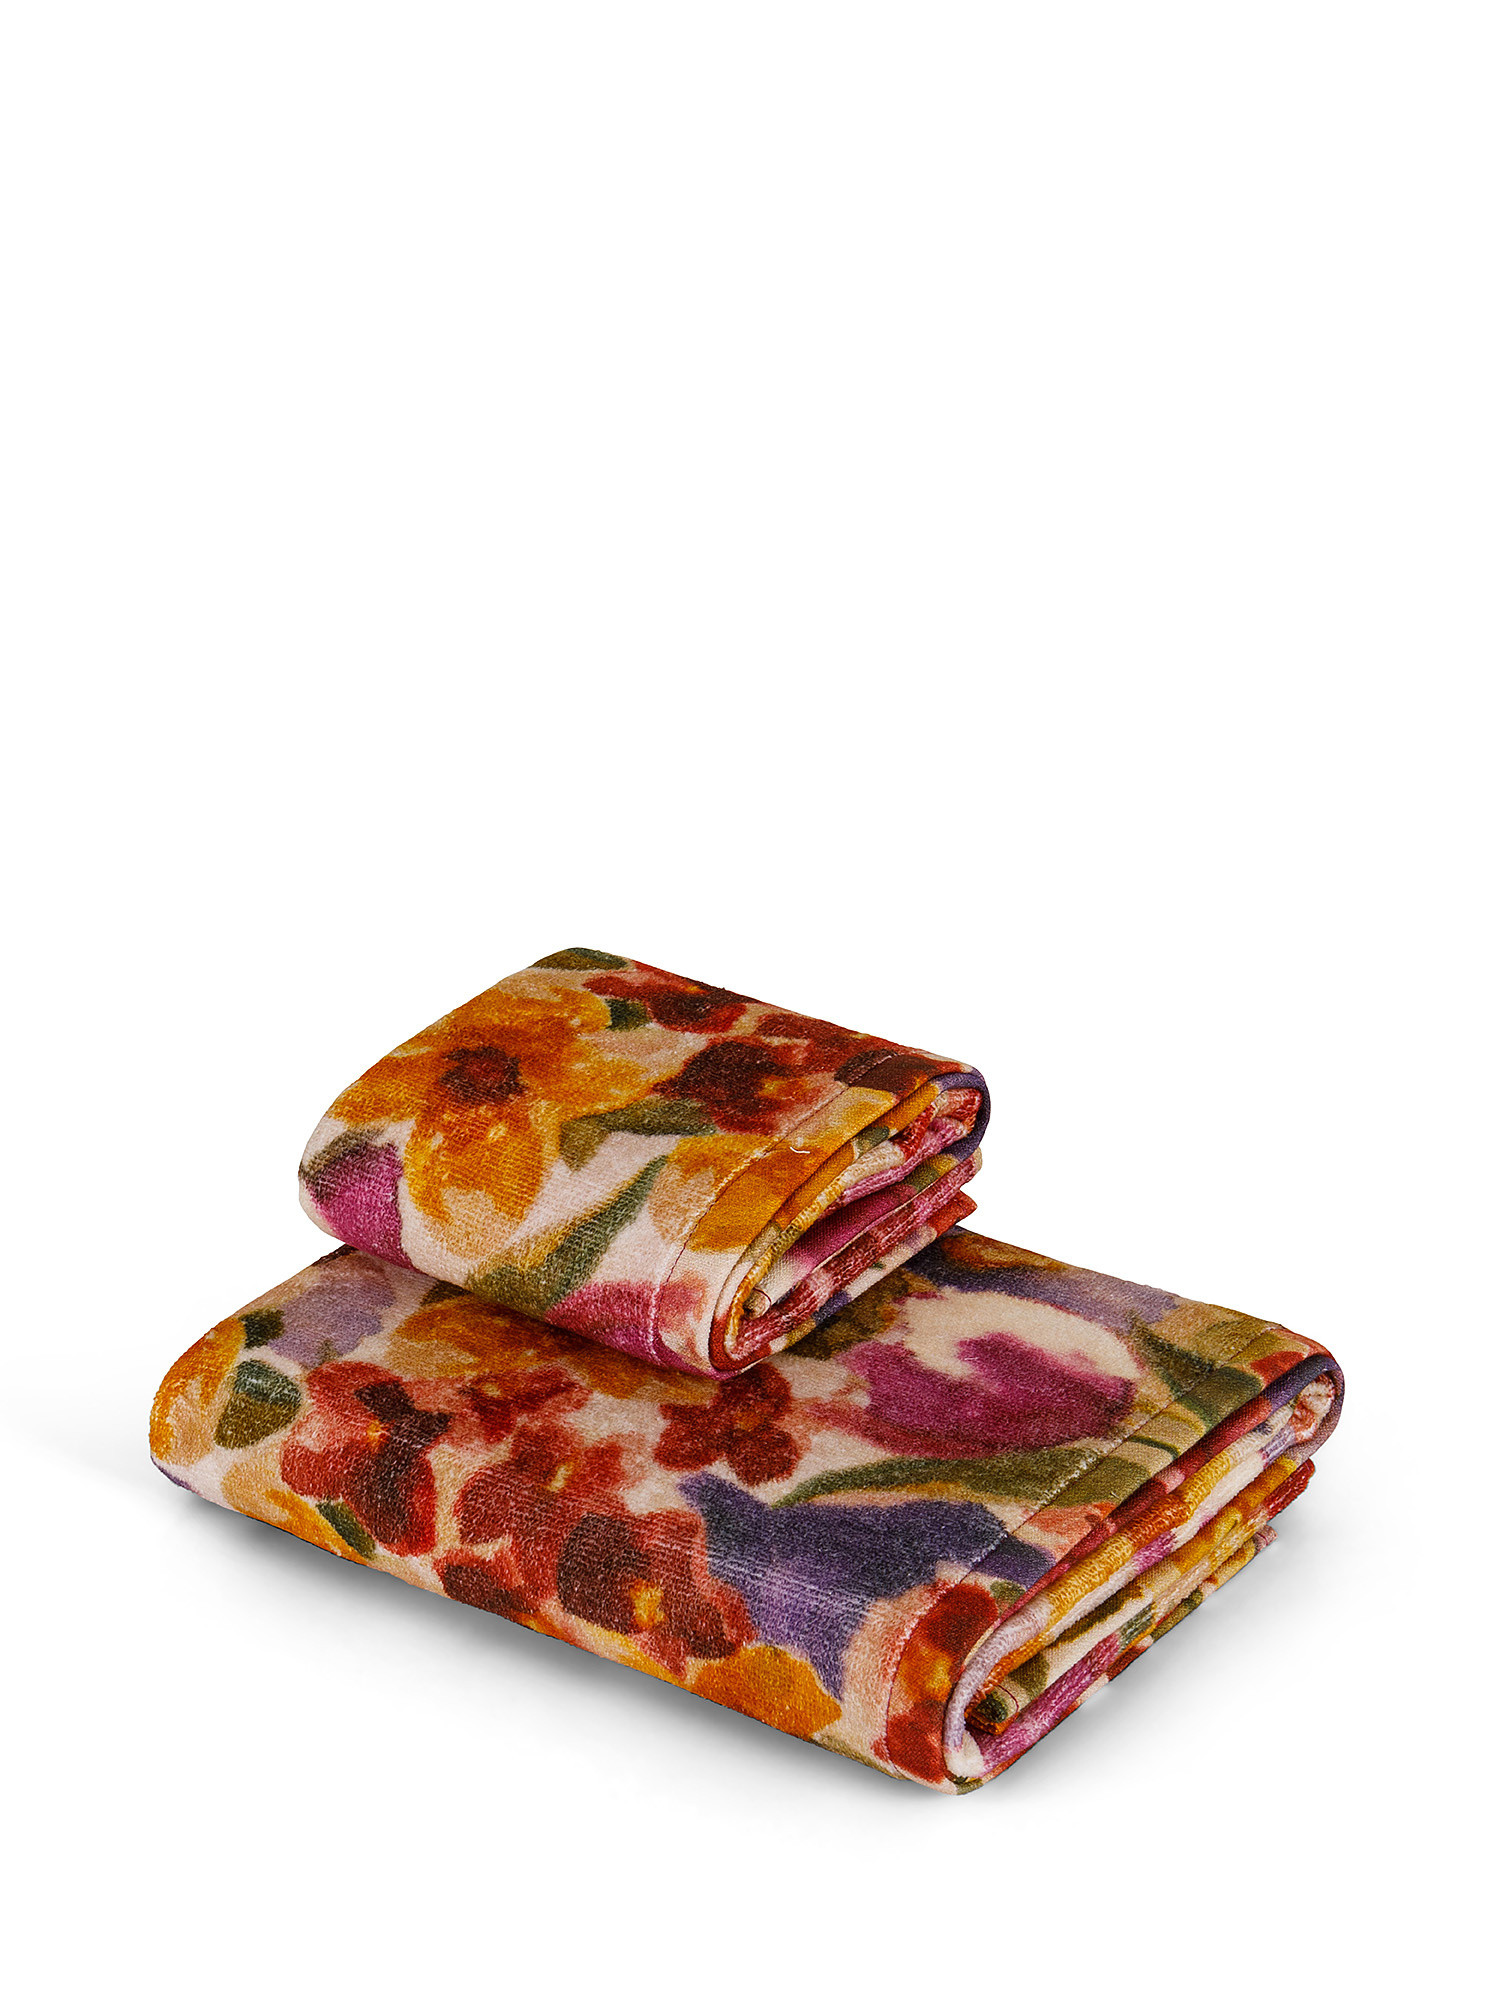 Asciugamano cotone velour stampa floreale, Multicolor, large image number 0